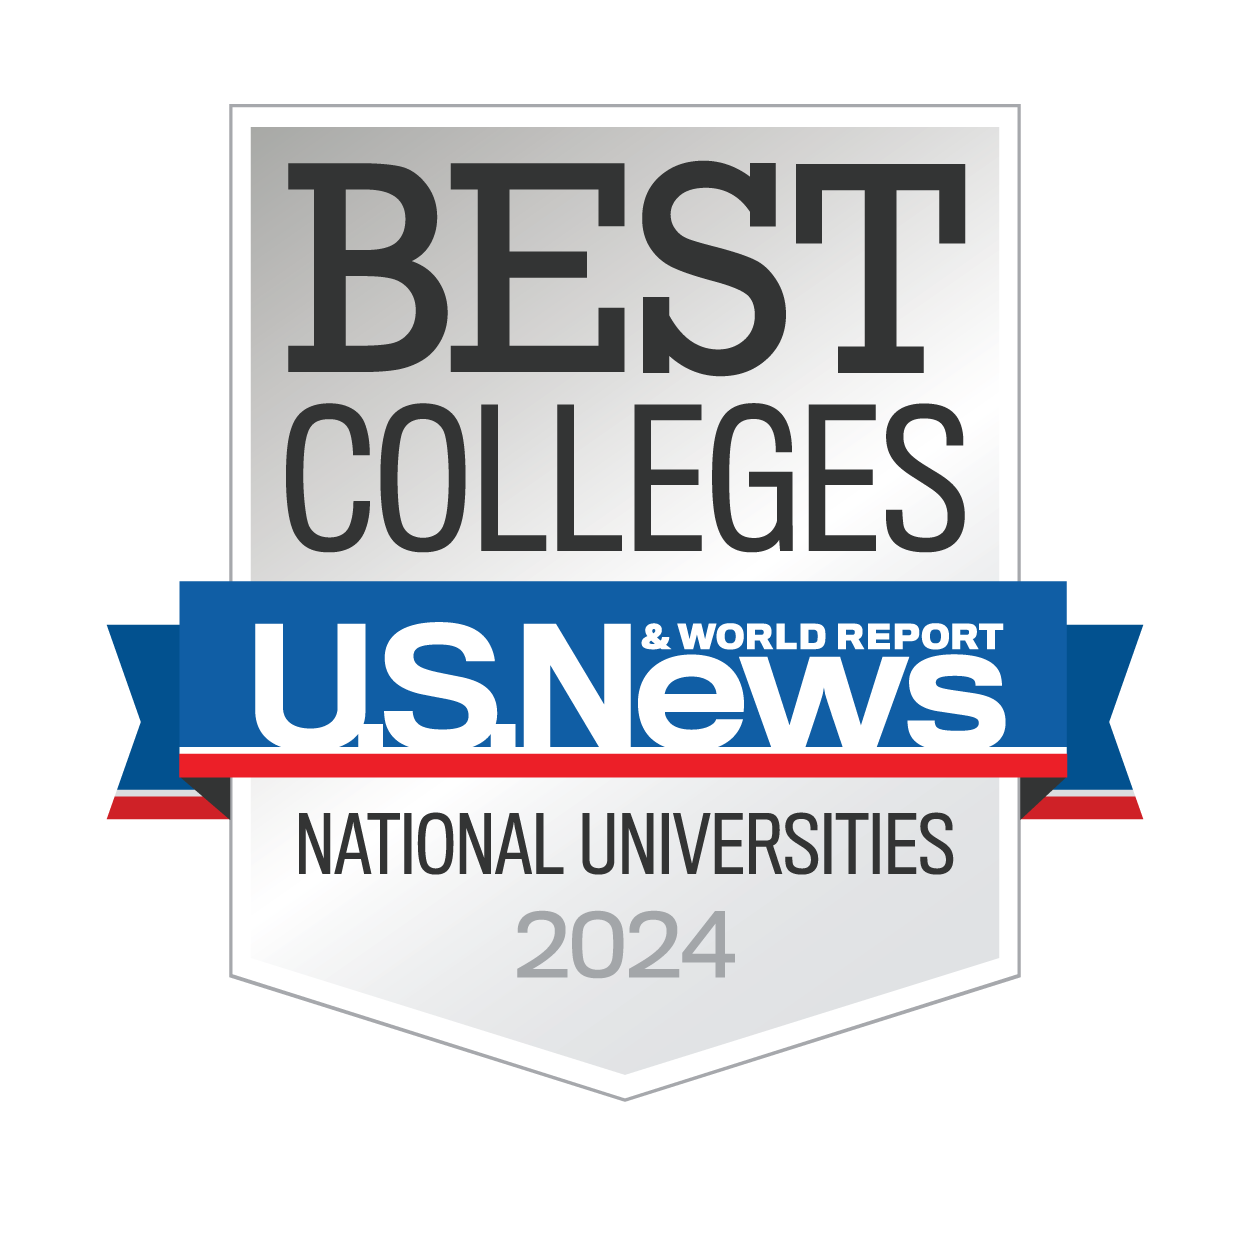 US News Best College